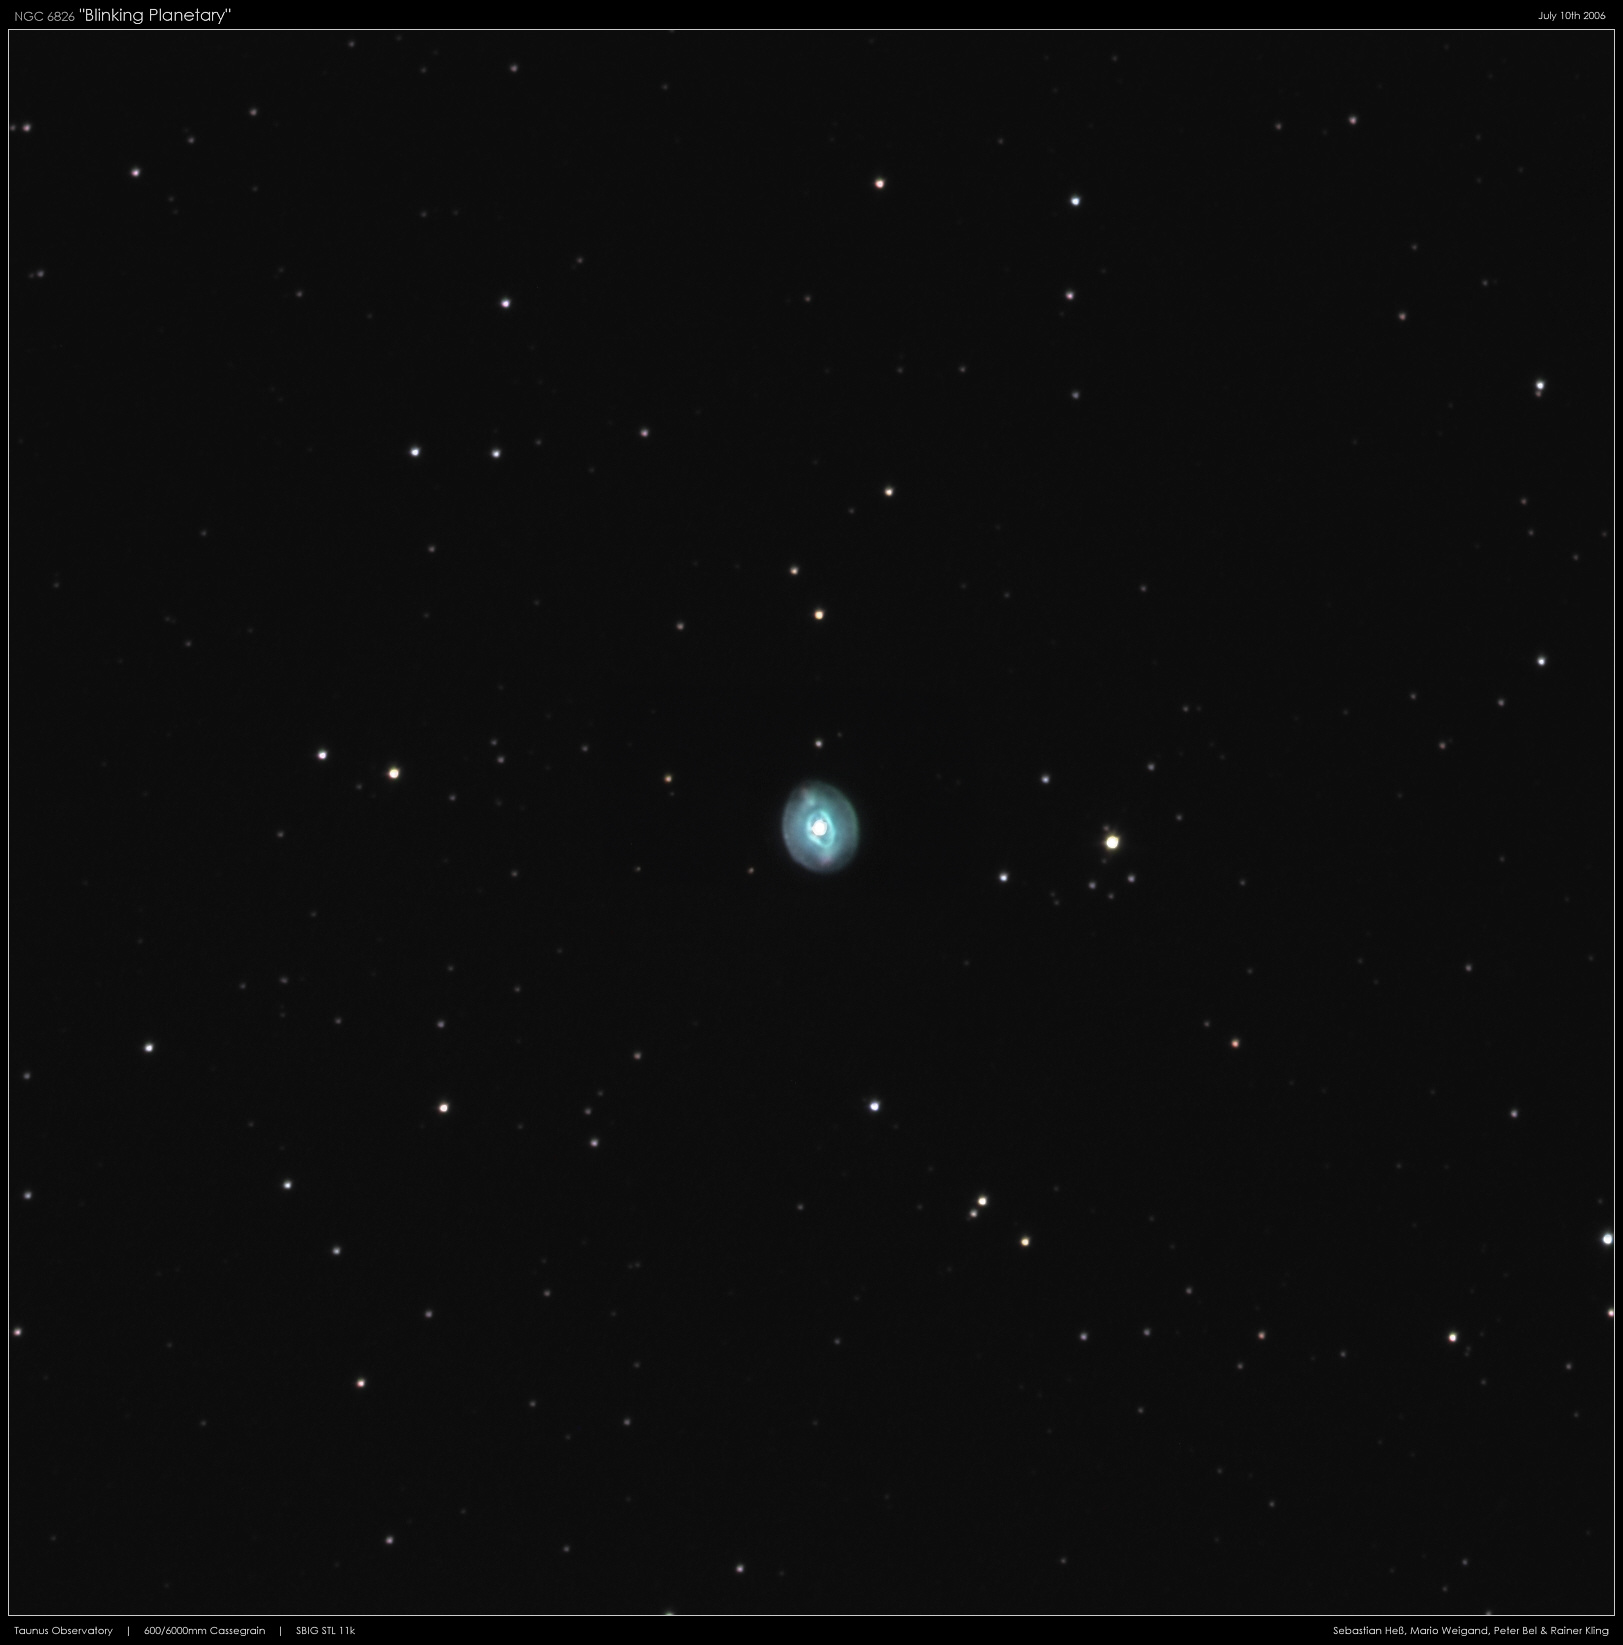 NGC6826 'Blinking Planetary'